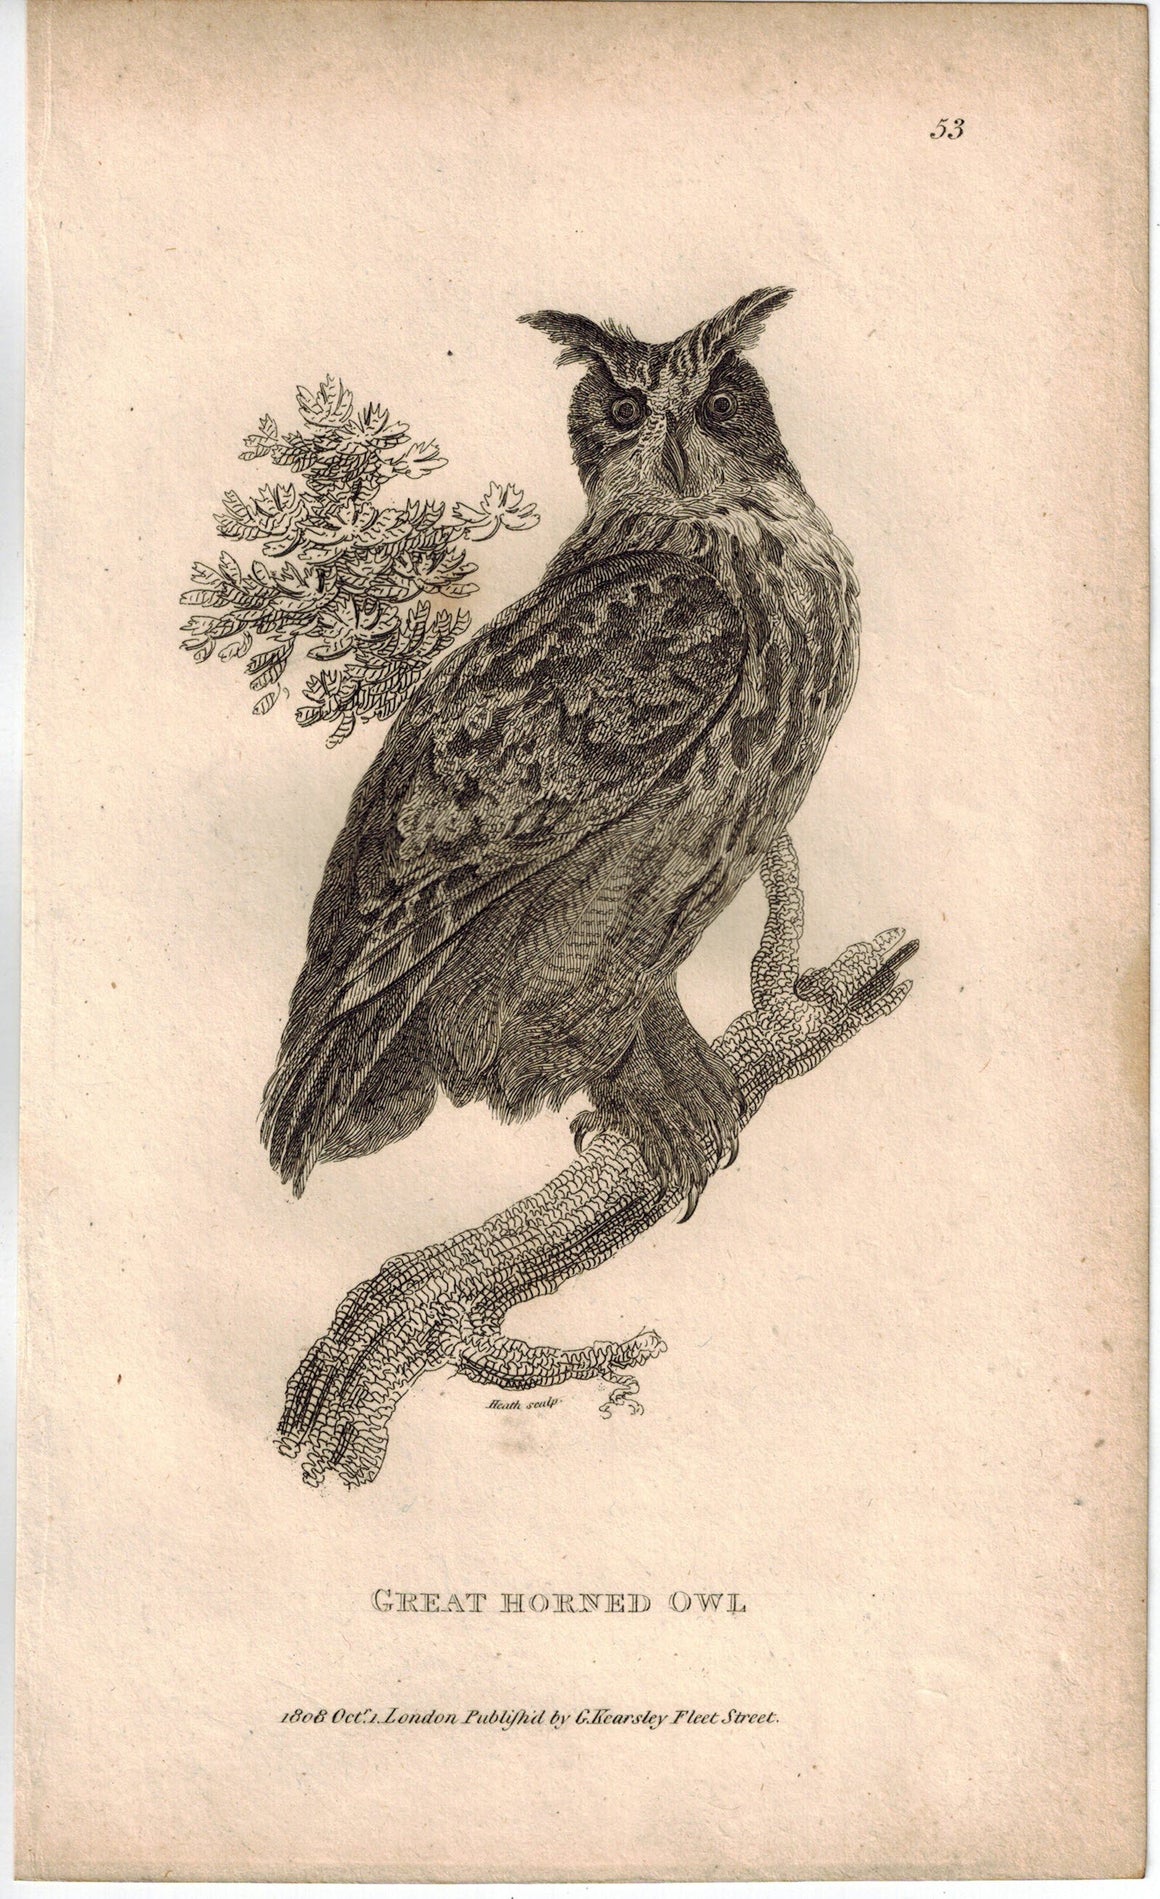 Great Horned Owl Print 1809 George Shaw Original Engraving